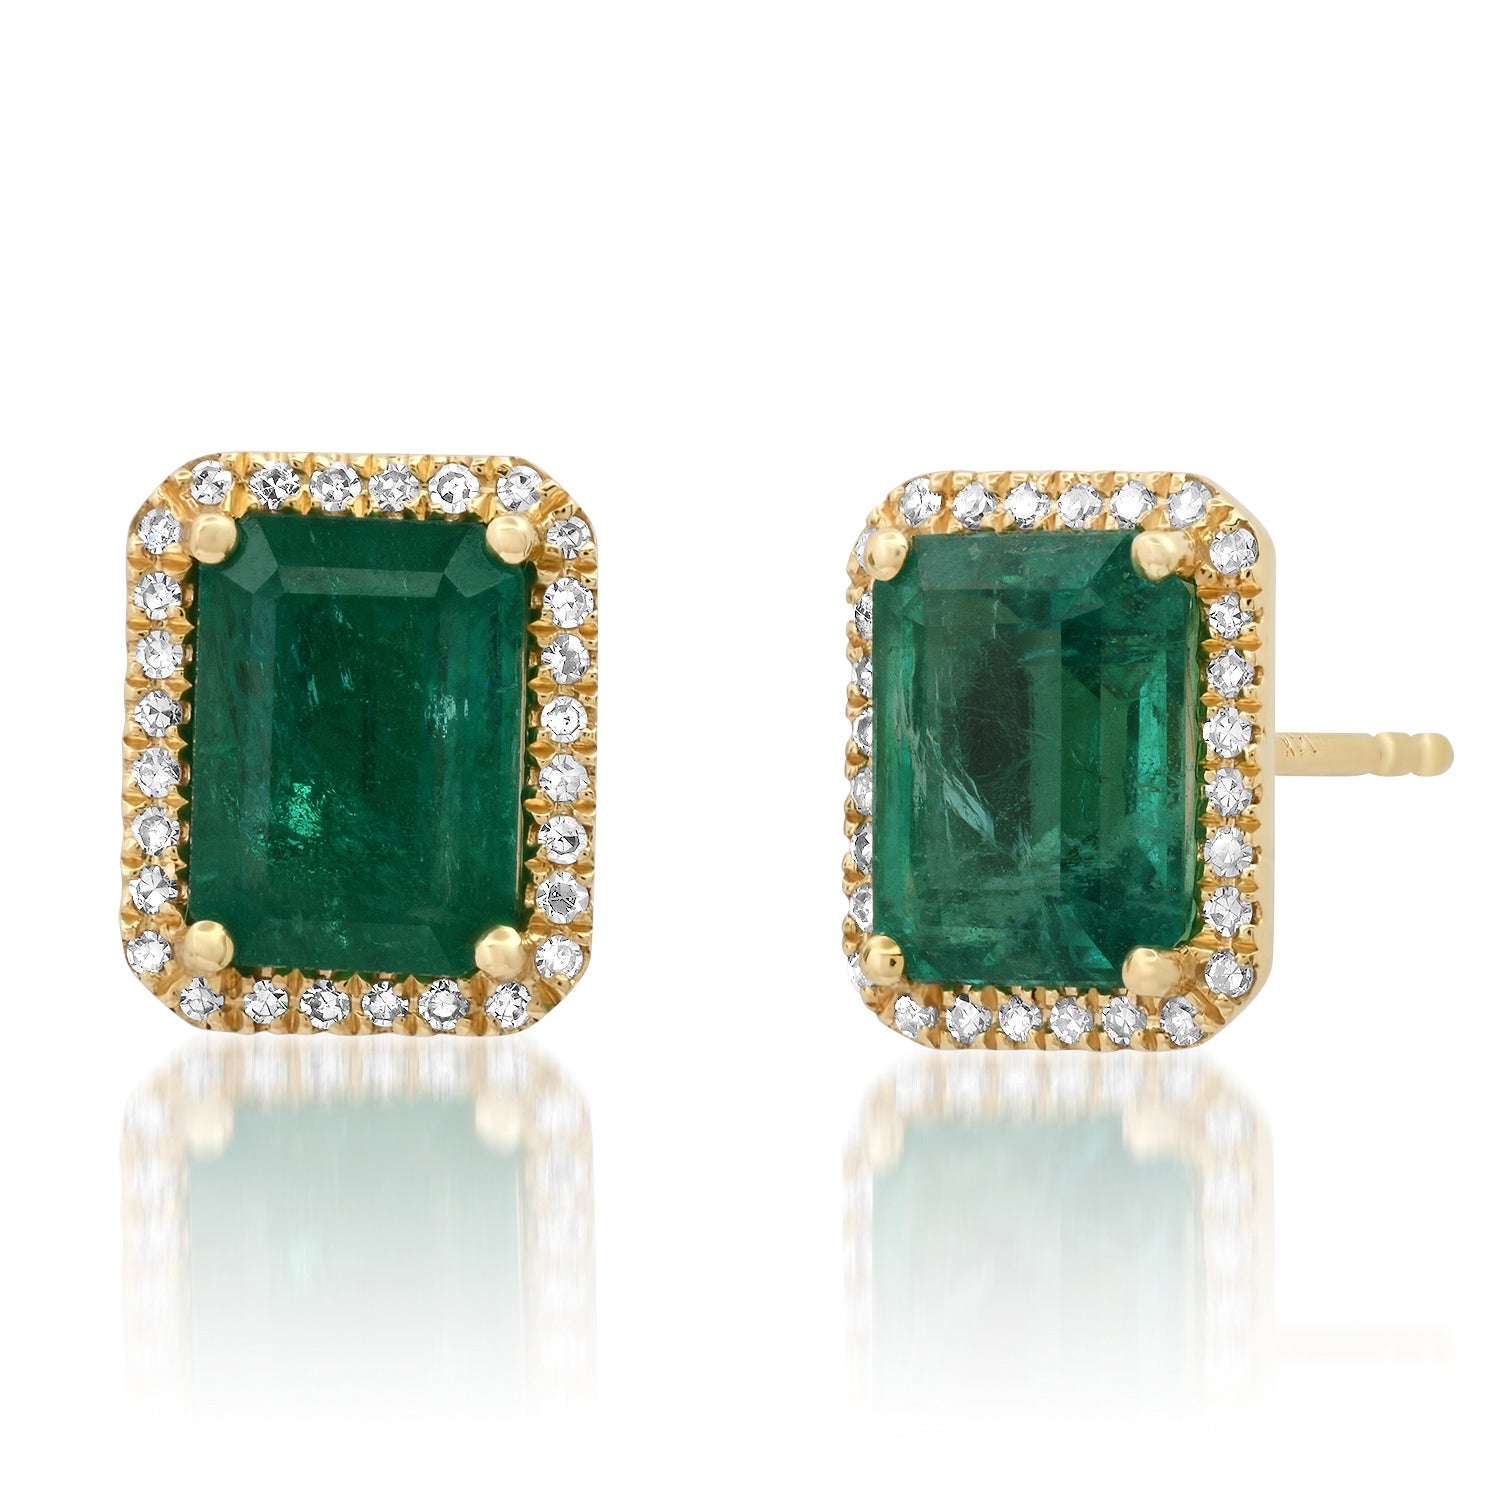 Jumbo Emerald Cut Emerald Stud Earrings with Diamond Frame